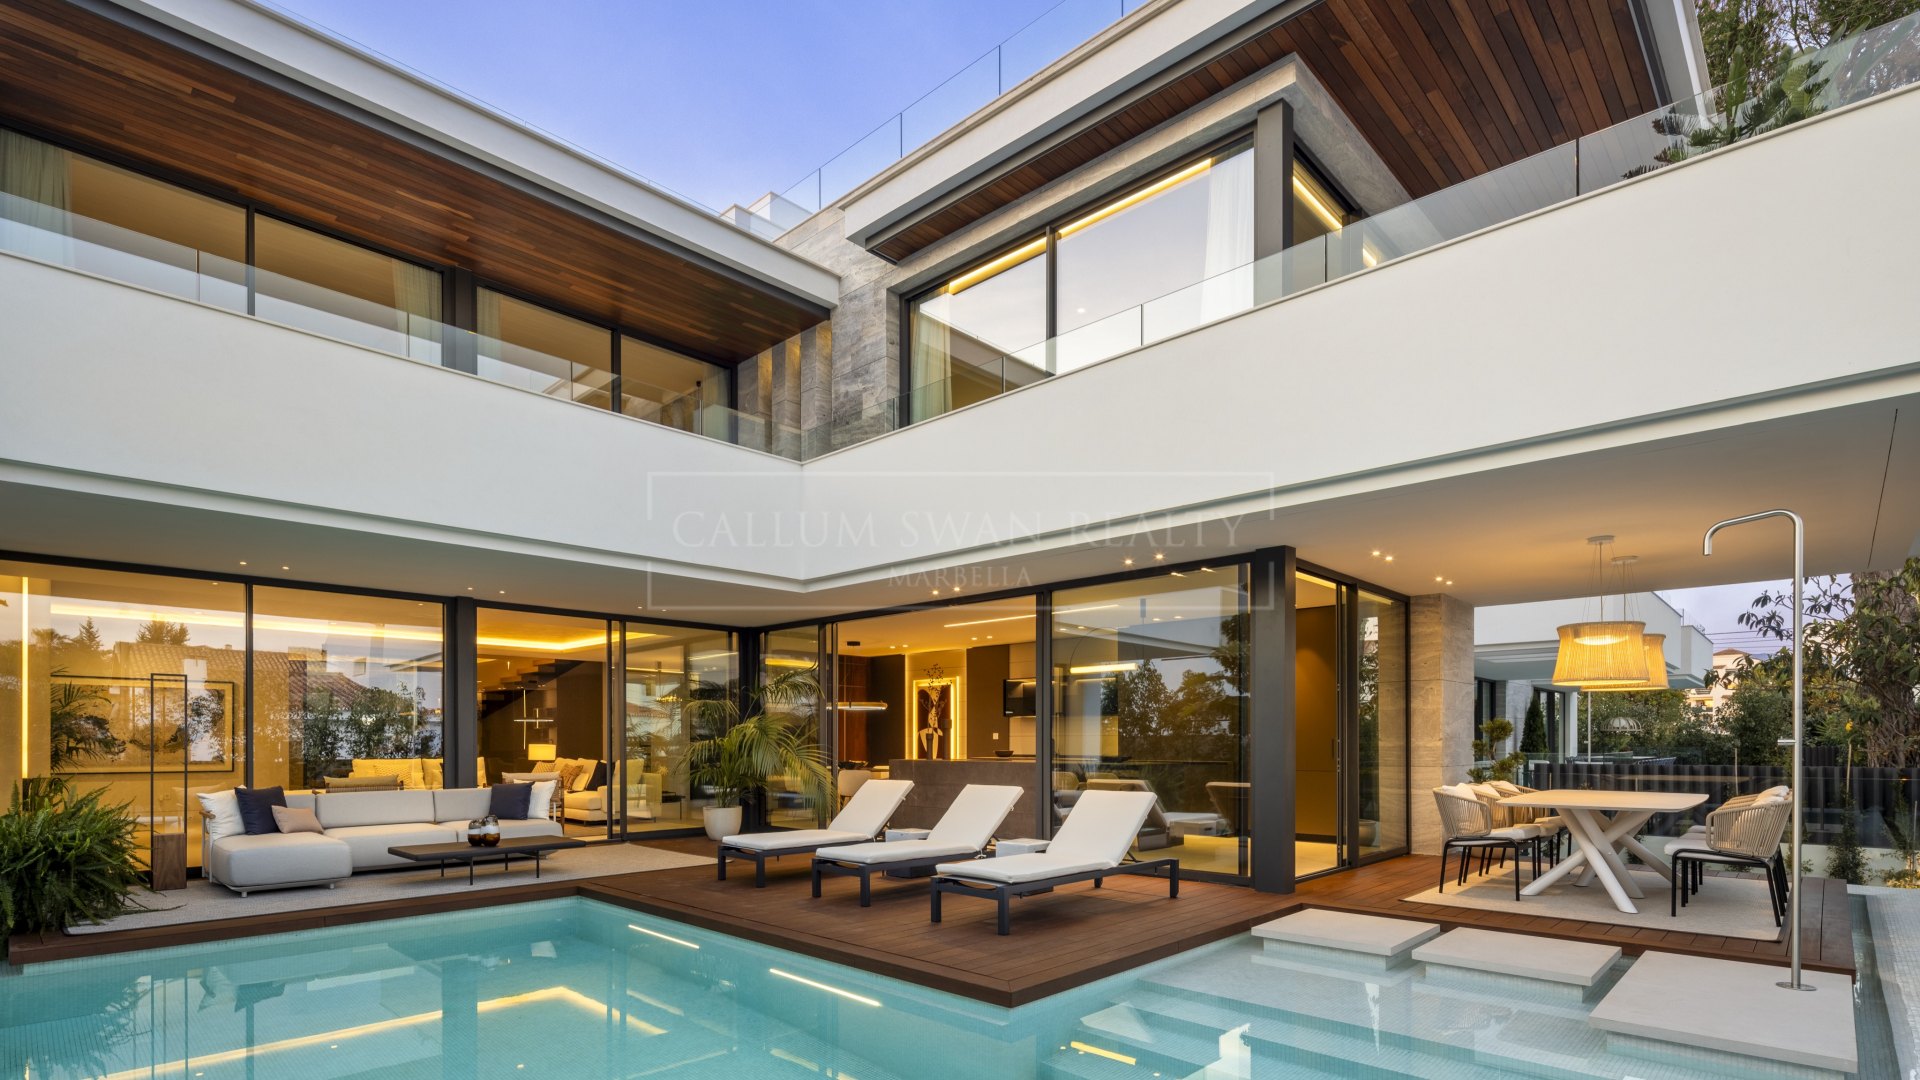 Stunning new modern villa in Cortijo Blanco